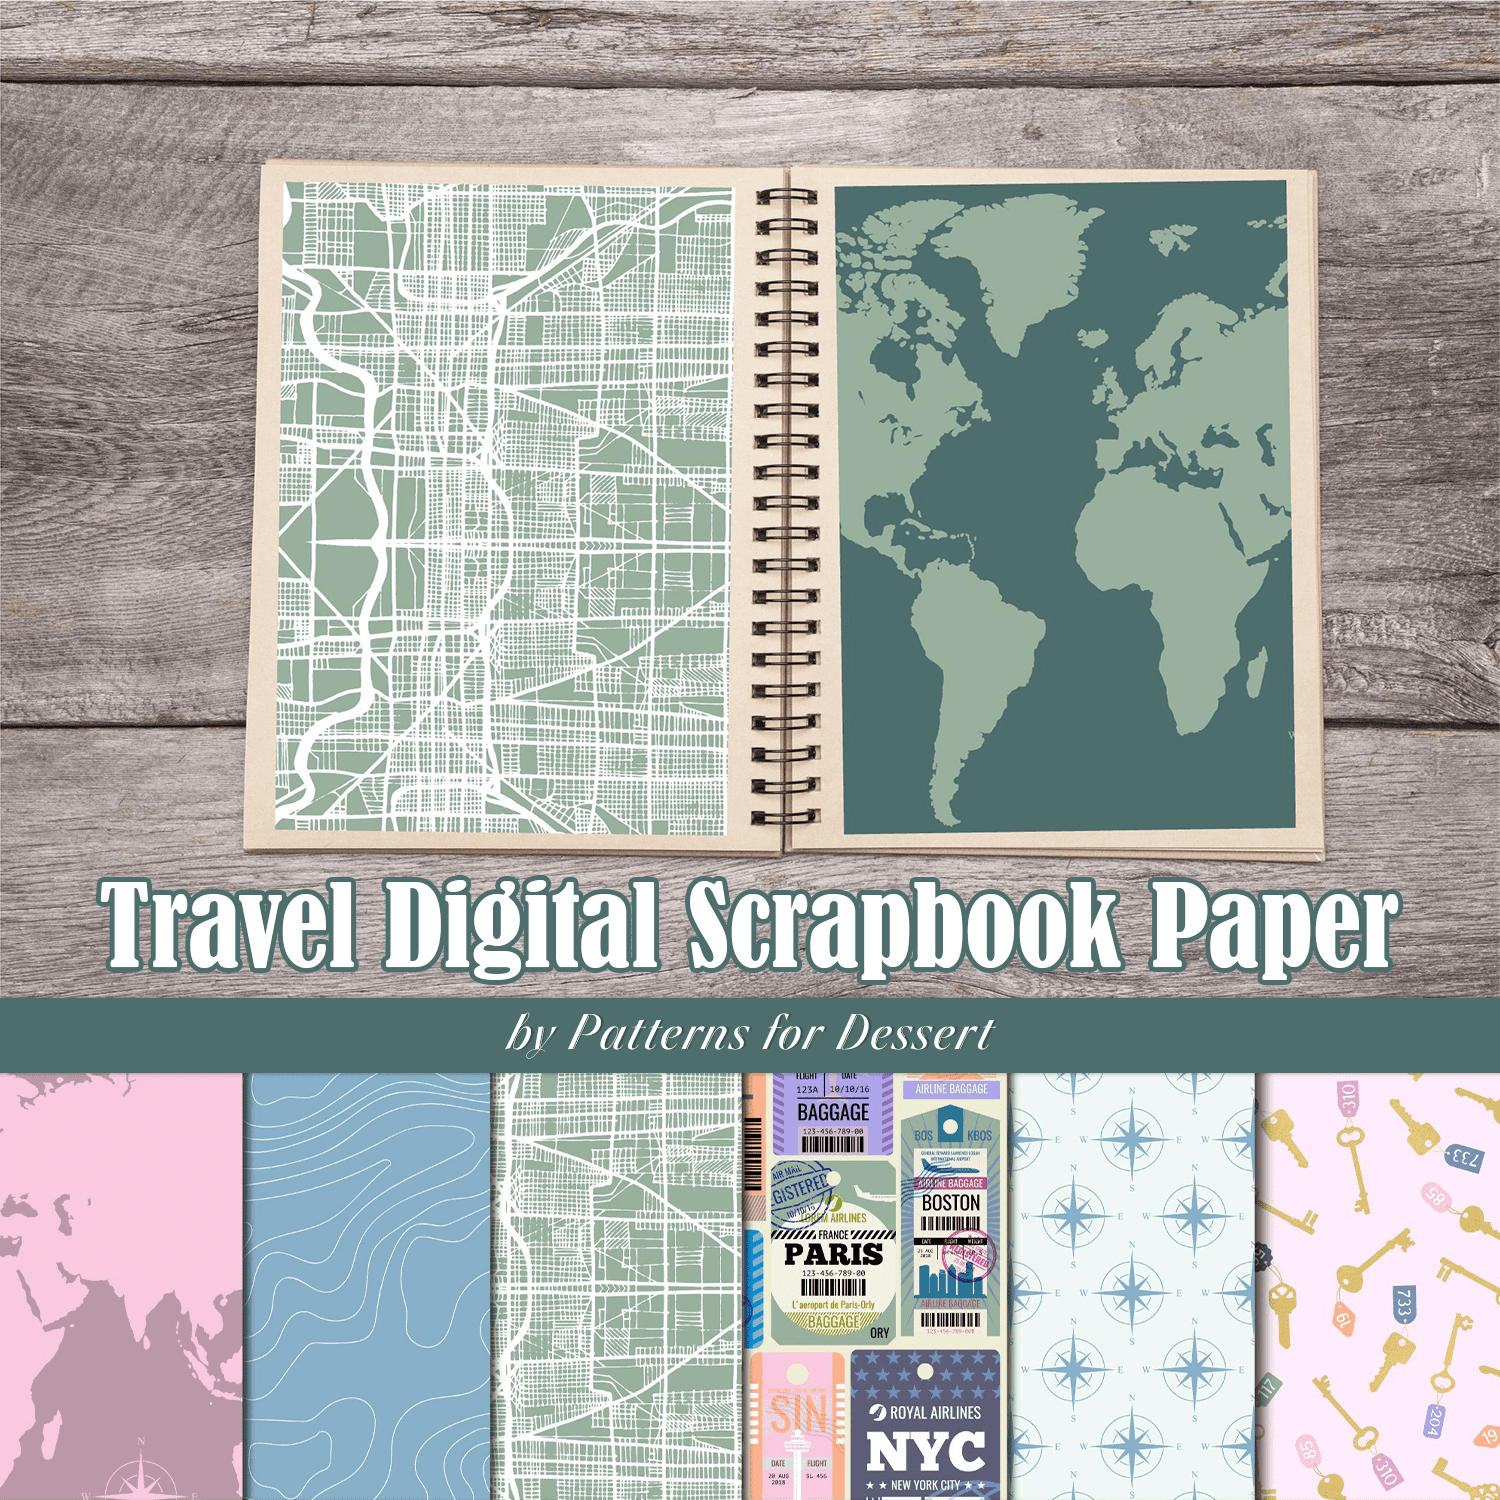 Travel Digital Scrapbook Paper cover.